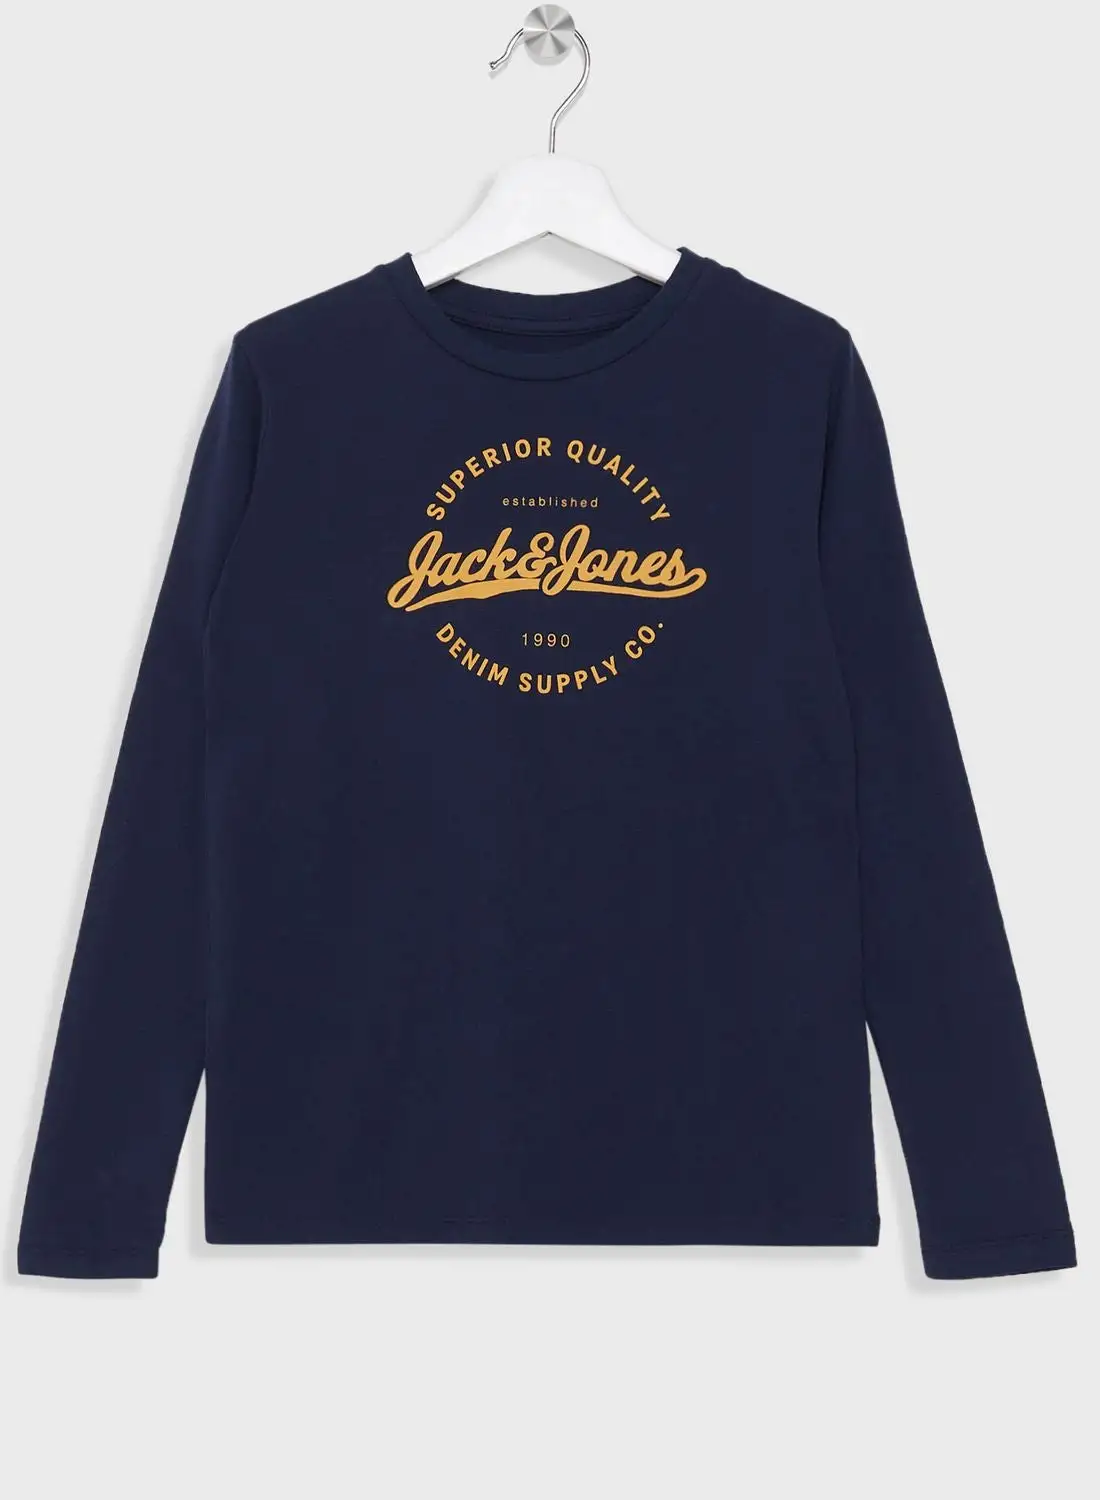 JACK & JONES Youth Graphic T-Shirt